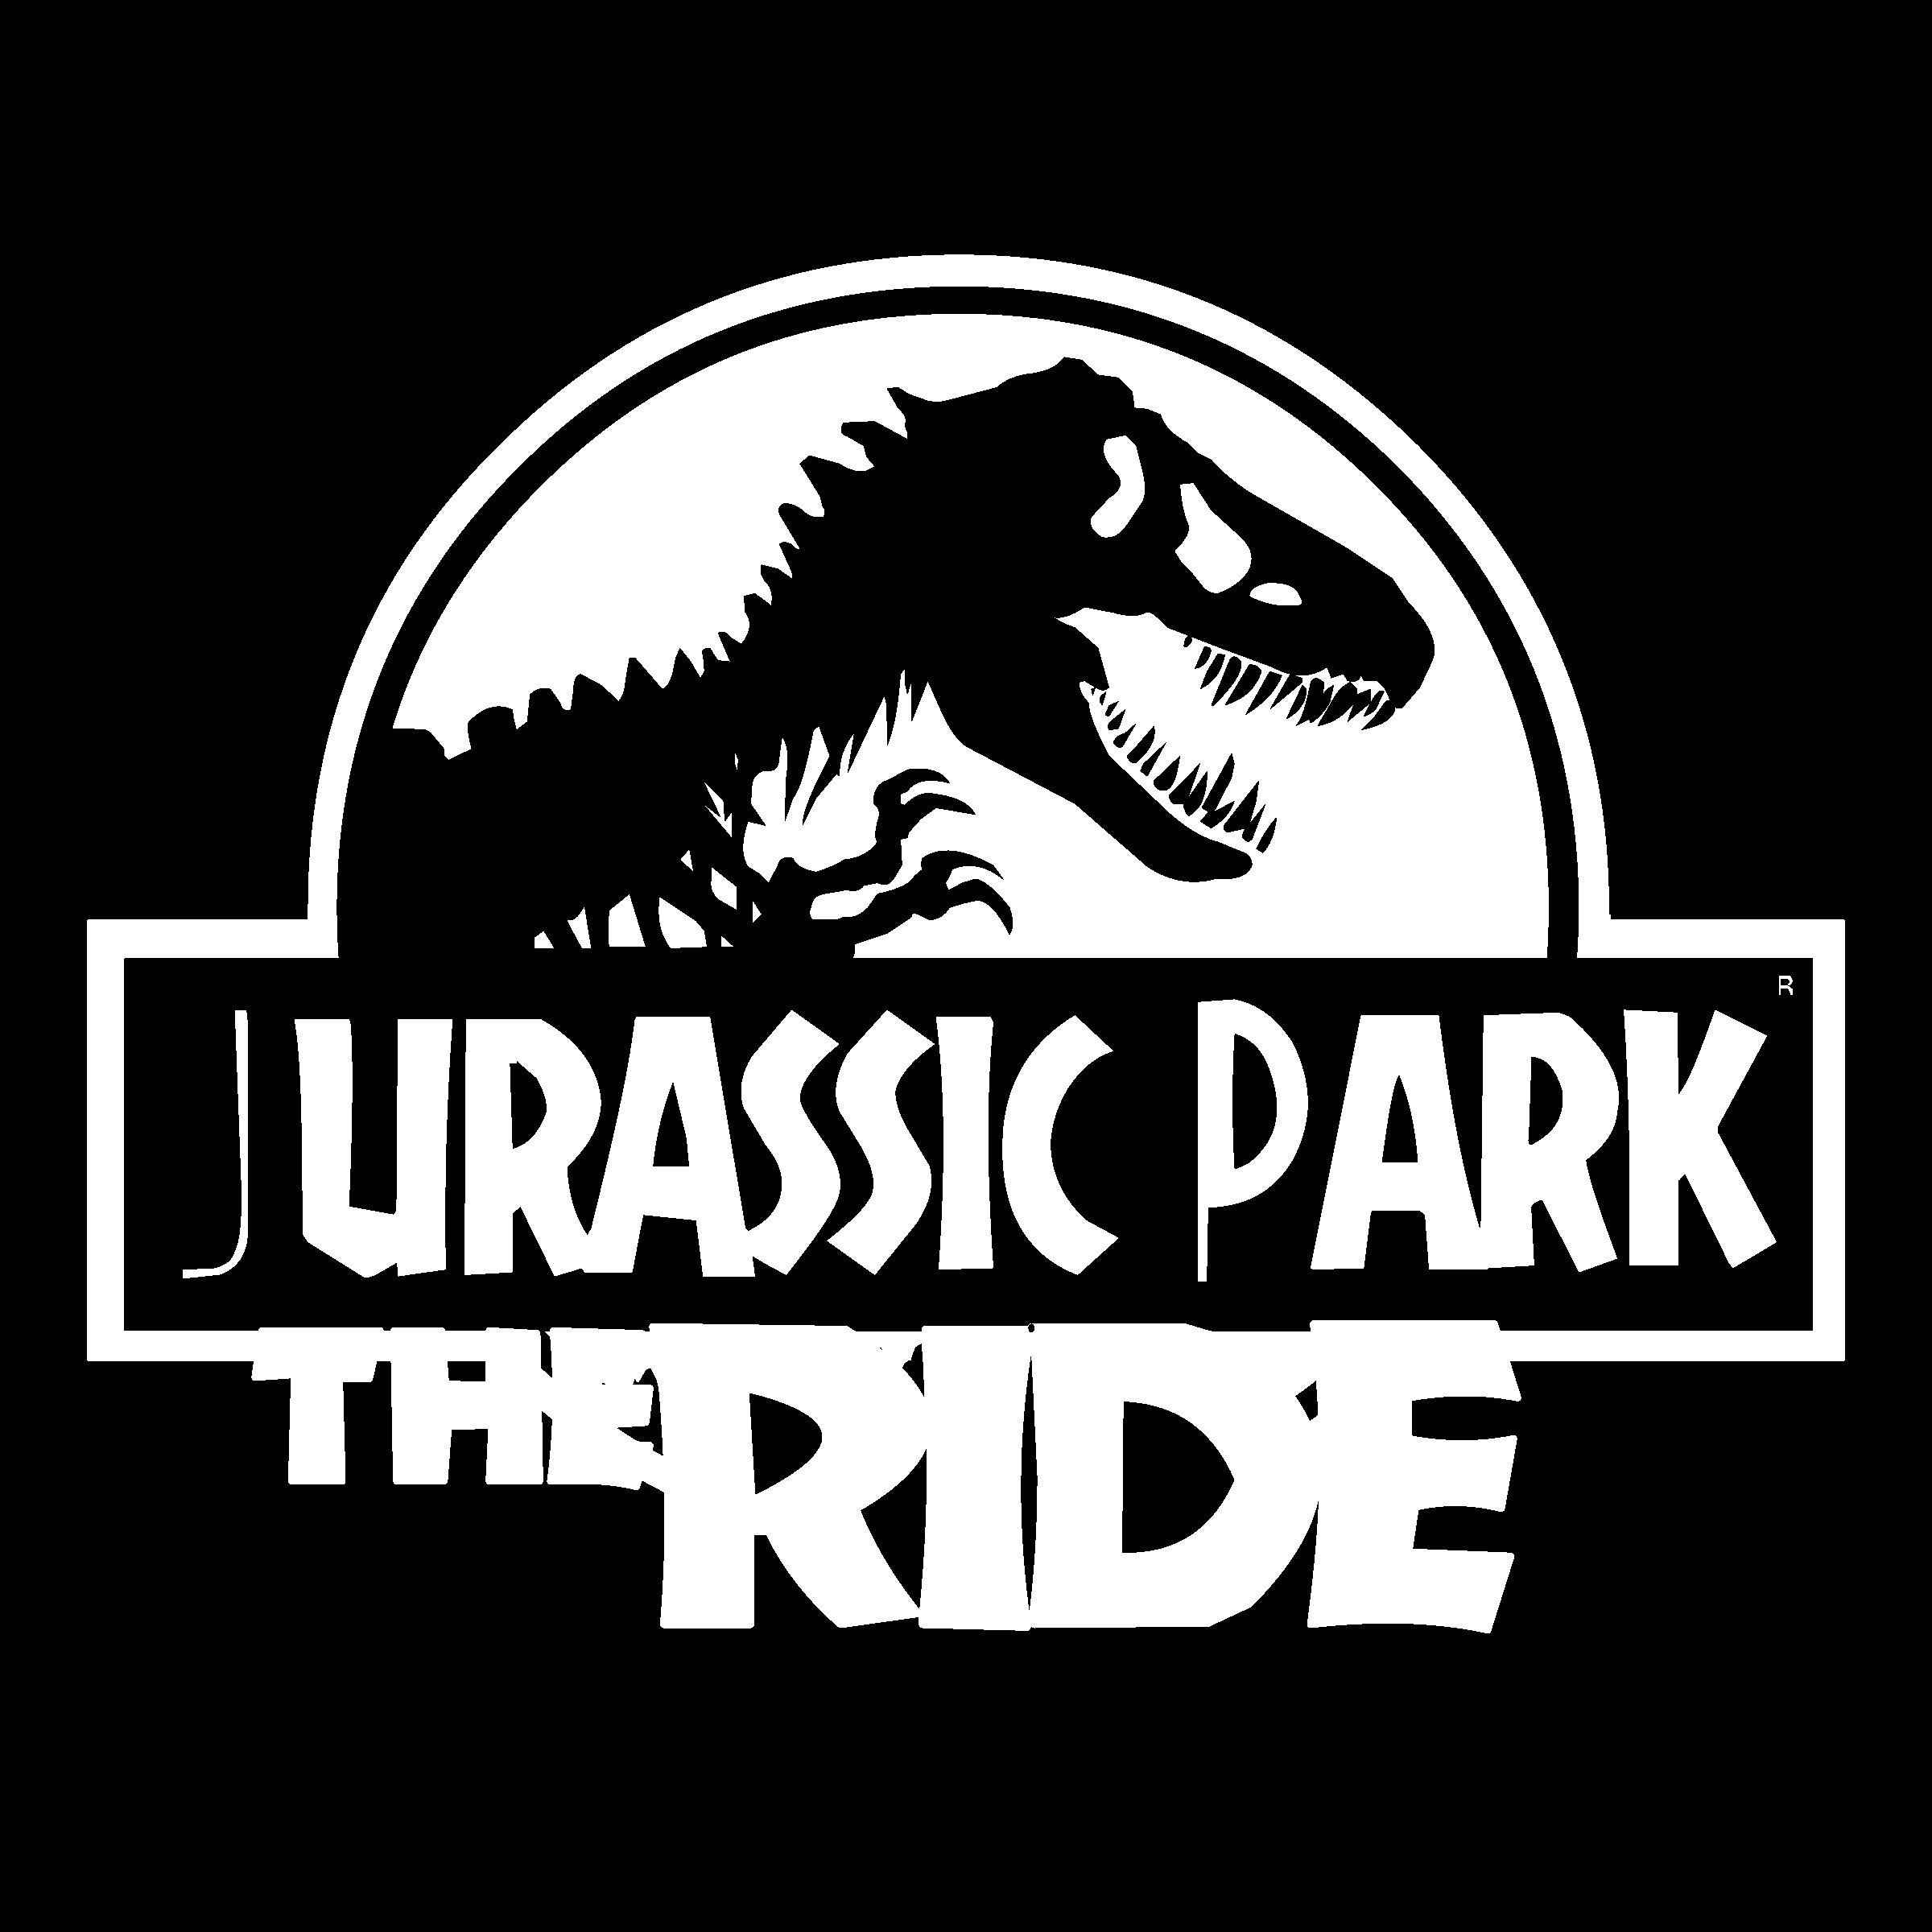 Jurassic Park Black and White Logo - Jurassic Park Logo PNG Transparent & SVG Vector - Freebie Supply